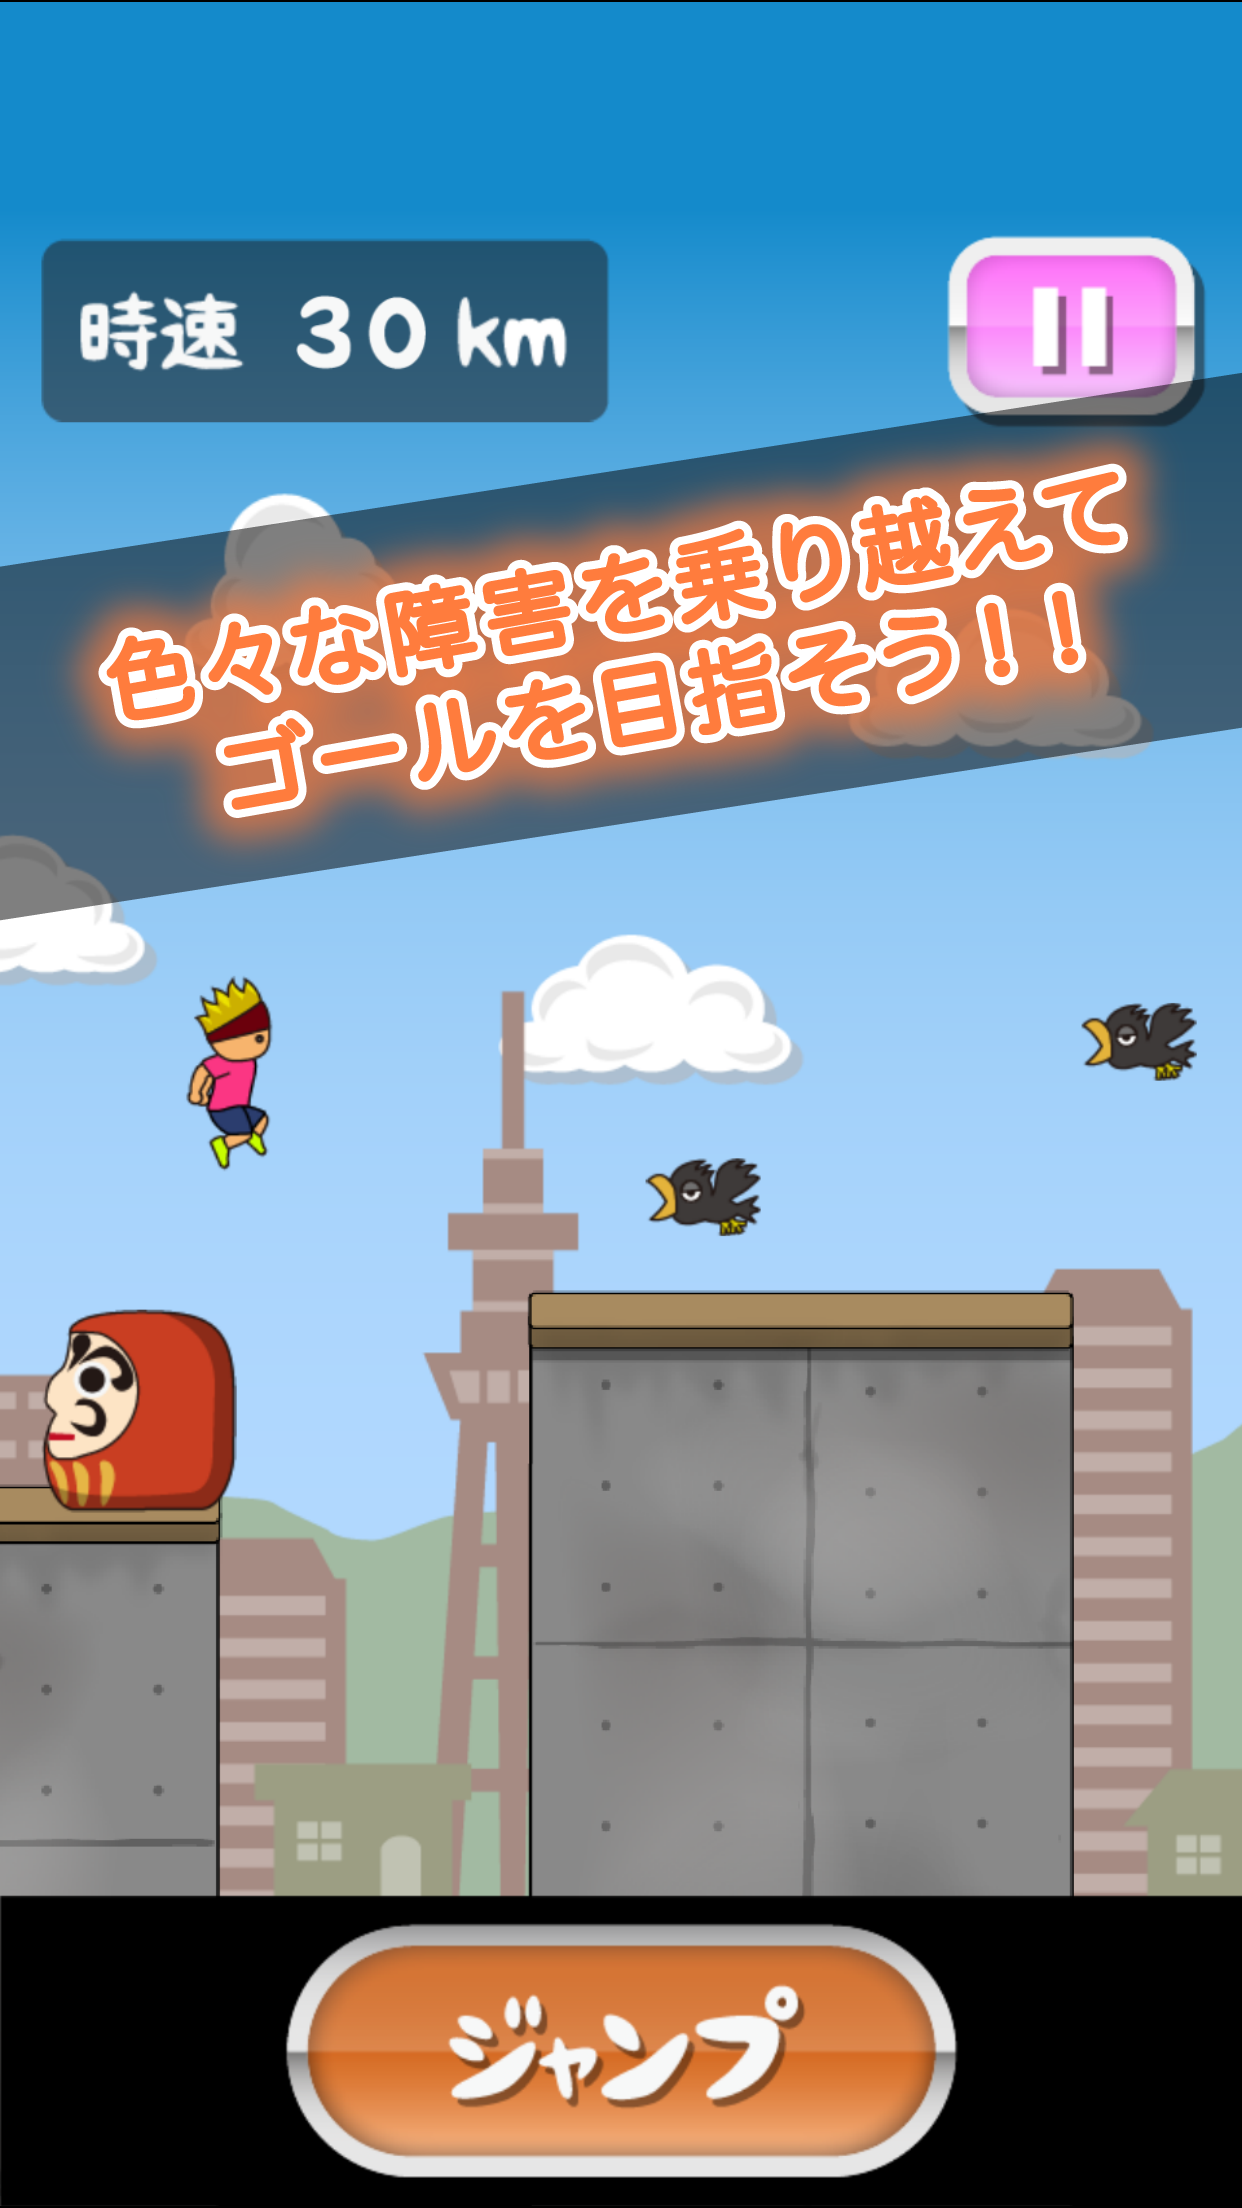 Screenshot 1 of La corsa esplosiva di Tony-kun 1.0